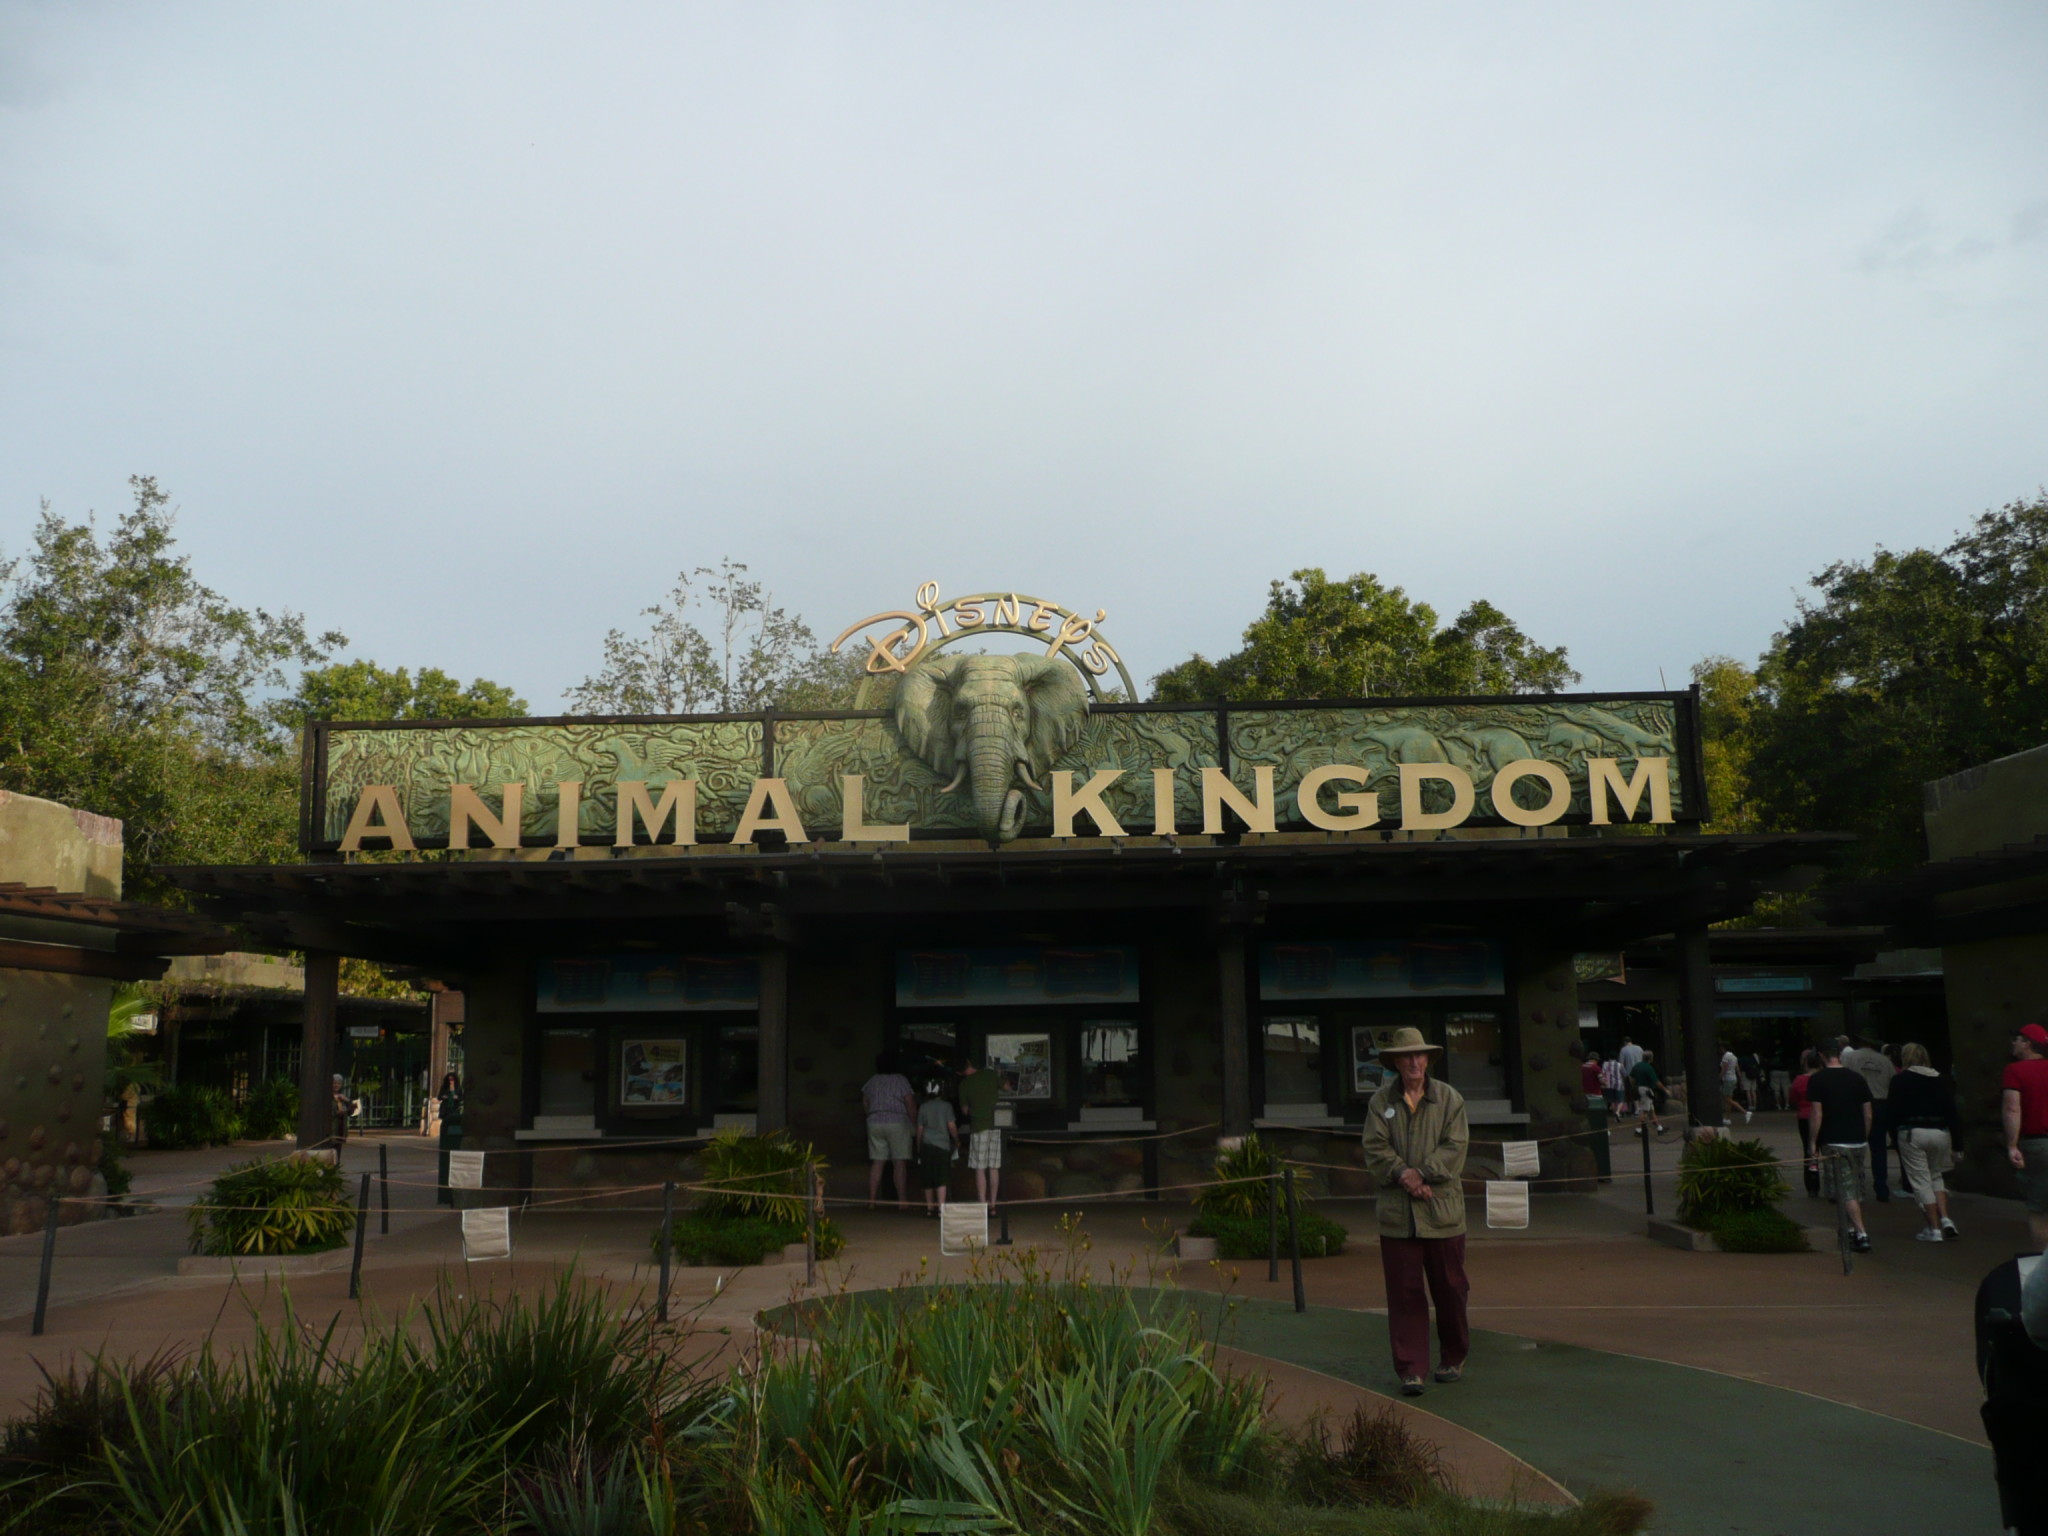 Food Allergy Information Kiosk to Open at Disney’s Animal Kingdom